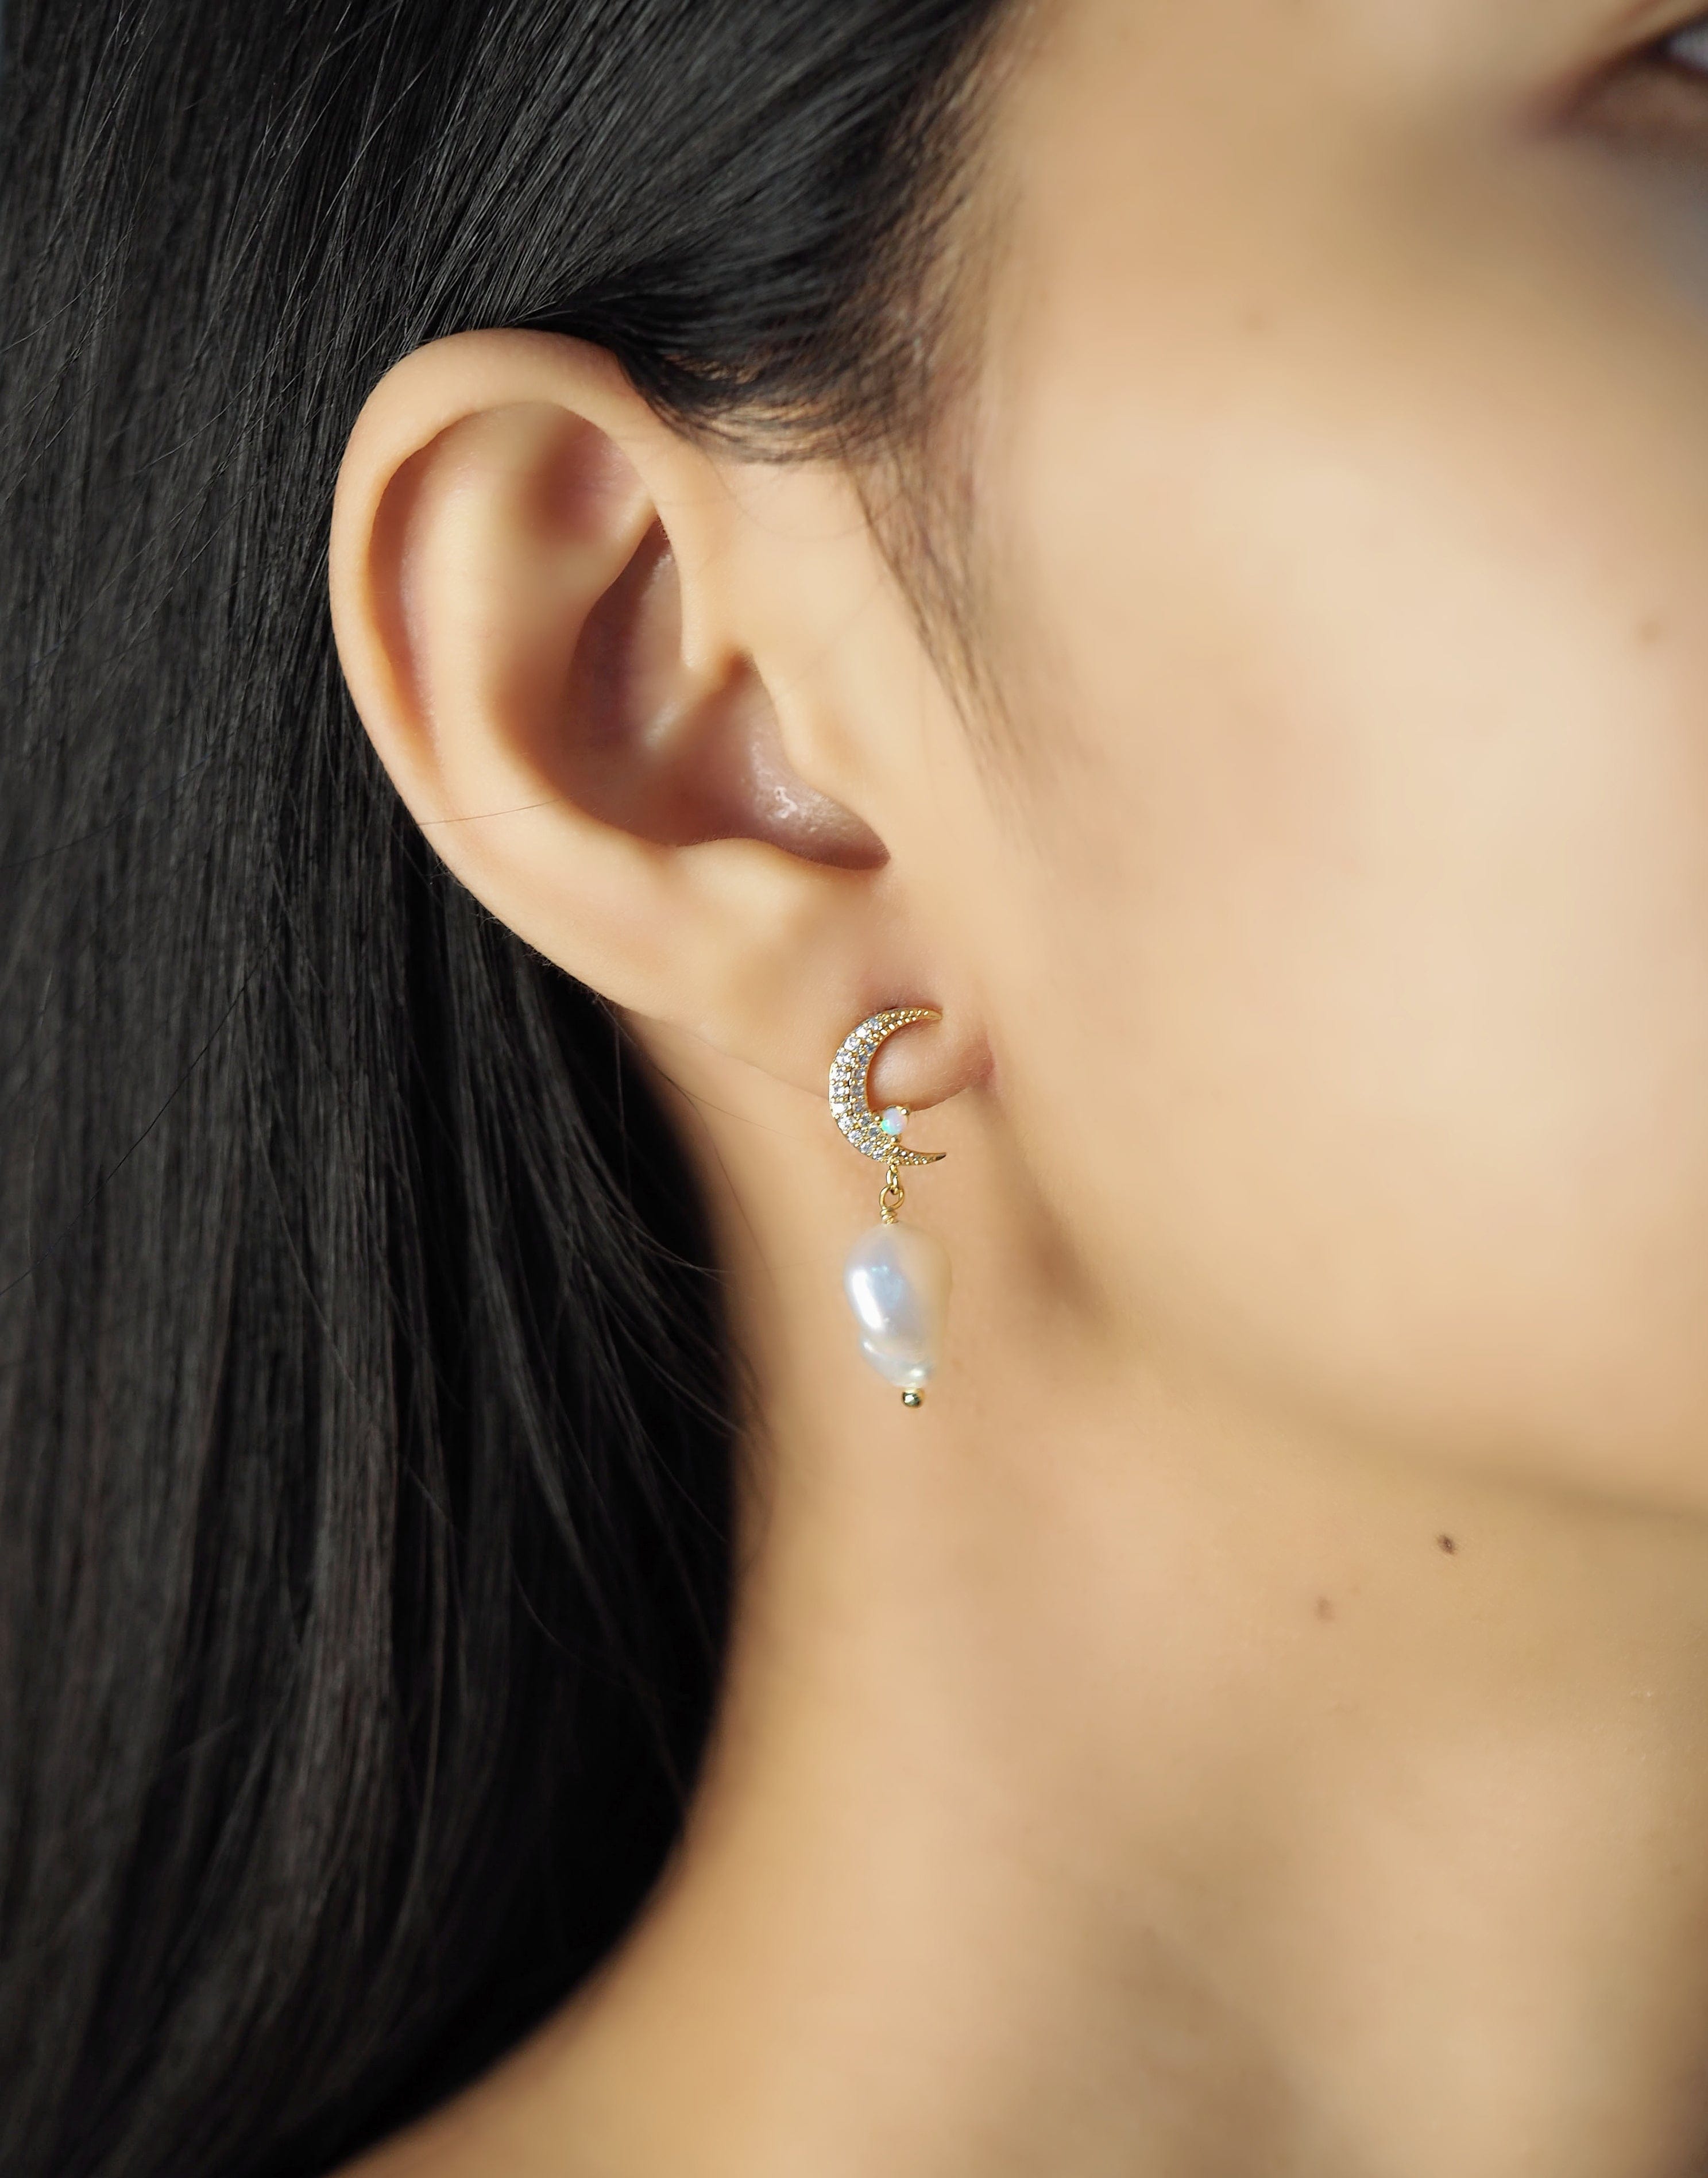 TAI JEWELRY Earrings Moon And Star Pearl Drop Earrings